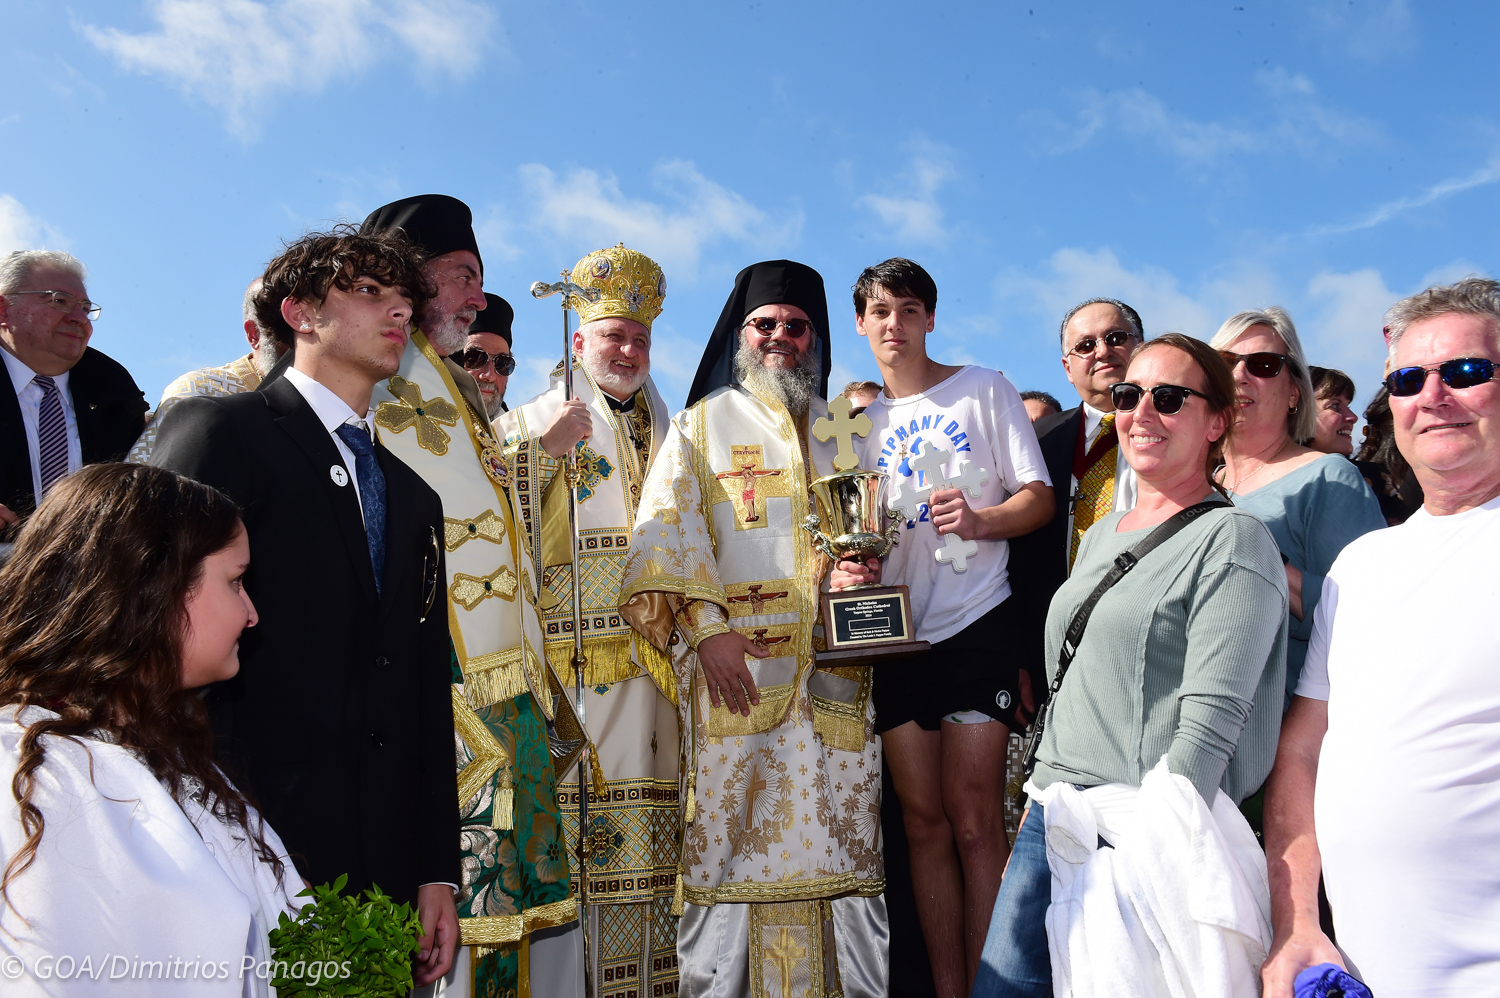 Archbishop Elpidophoros Participates in Annual Epiphany Celebrations in Tarpon Springs